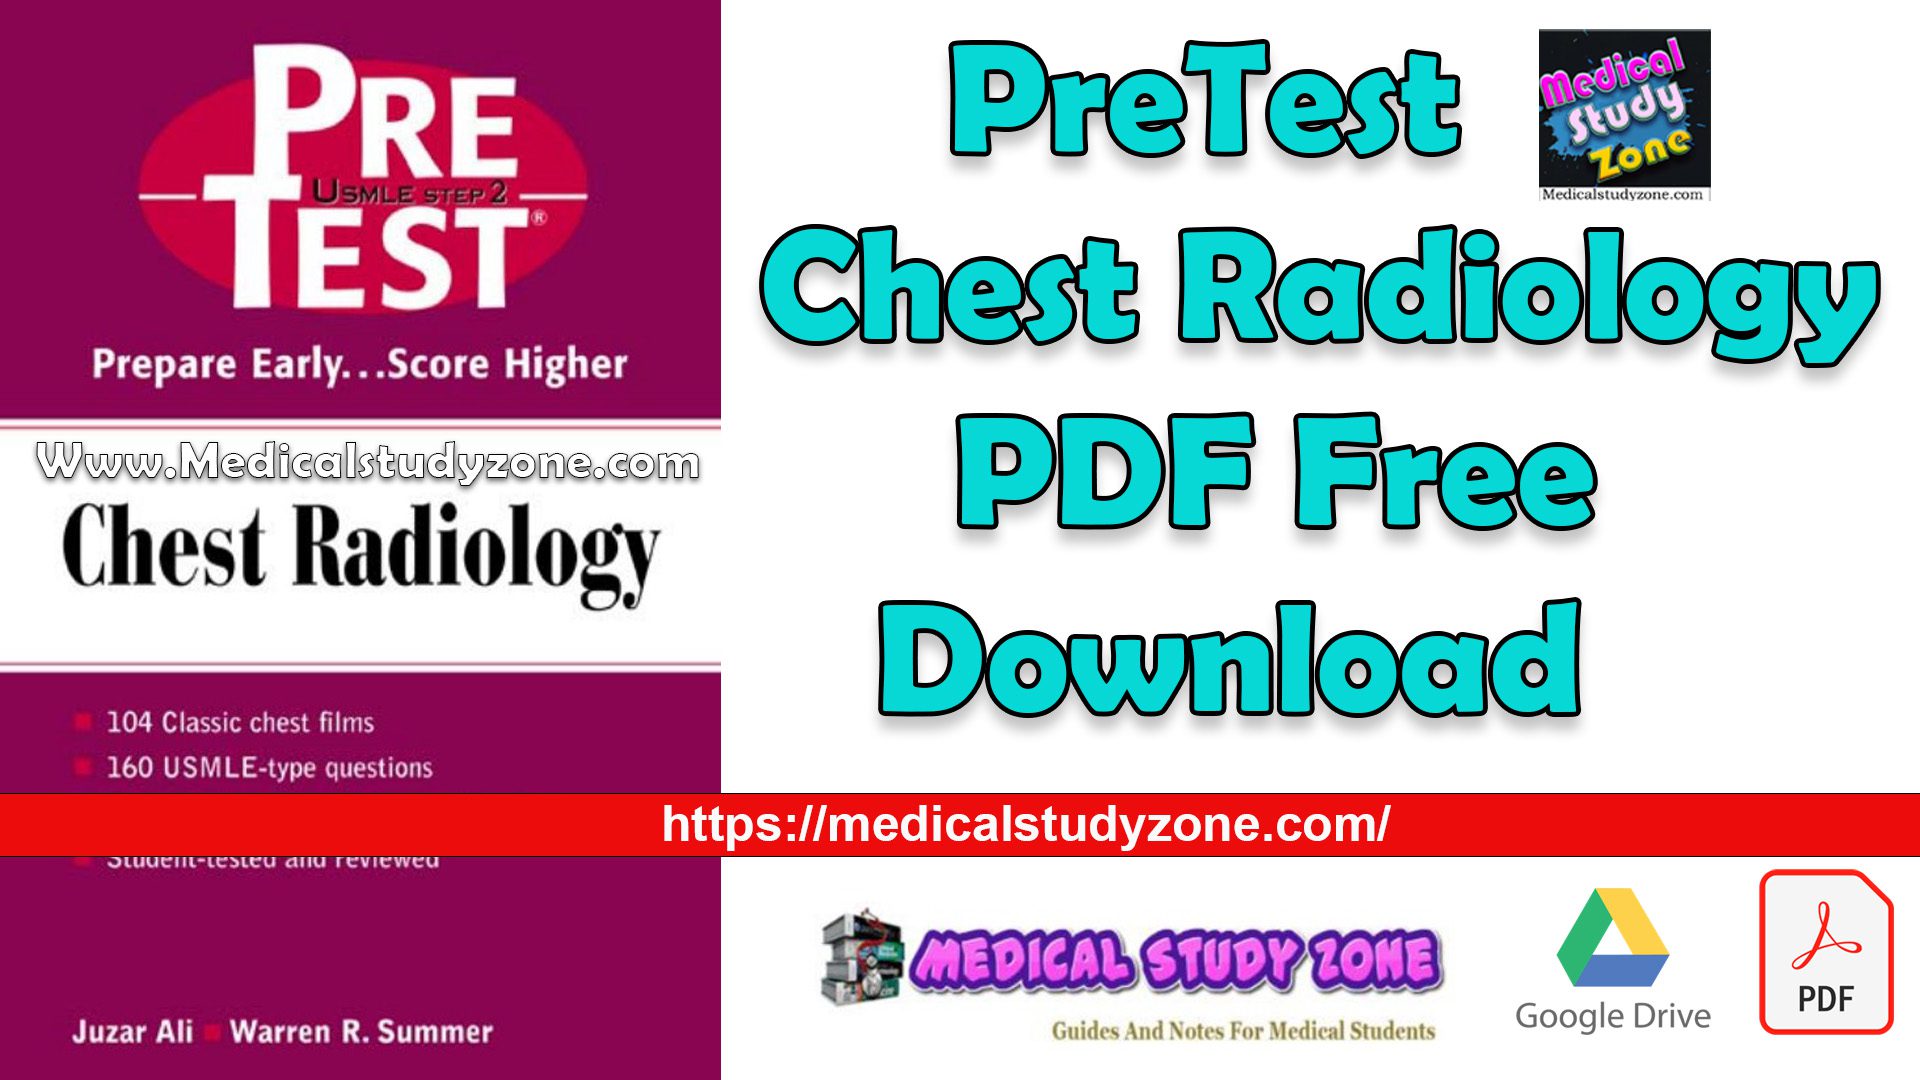 PreTest Chest Radiology PDF Free Download